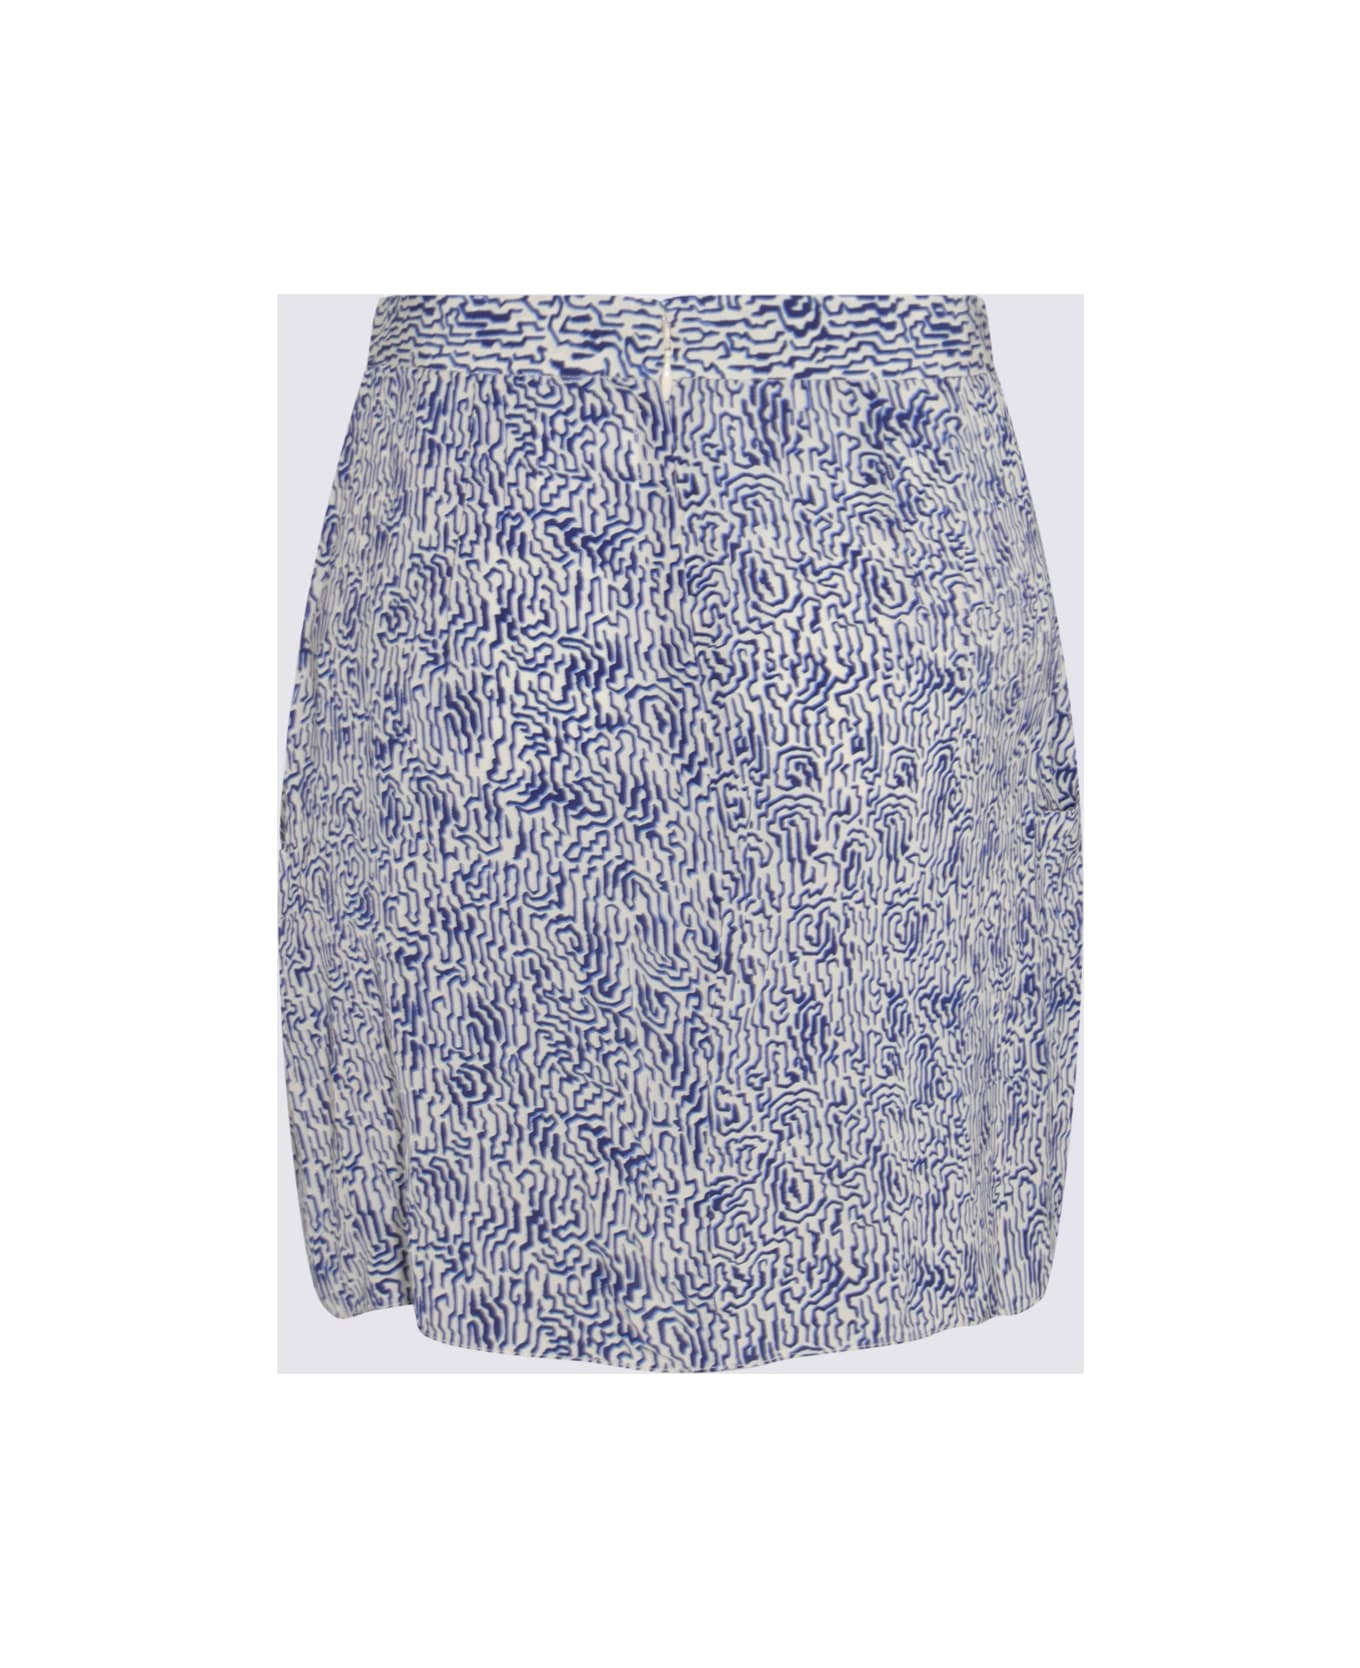 Marant Étoile Cotton Skirt - Blue スカート